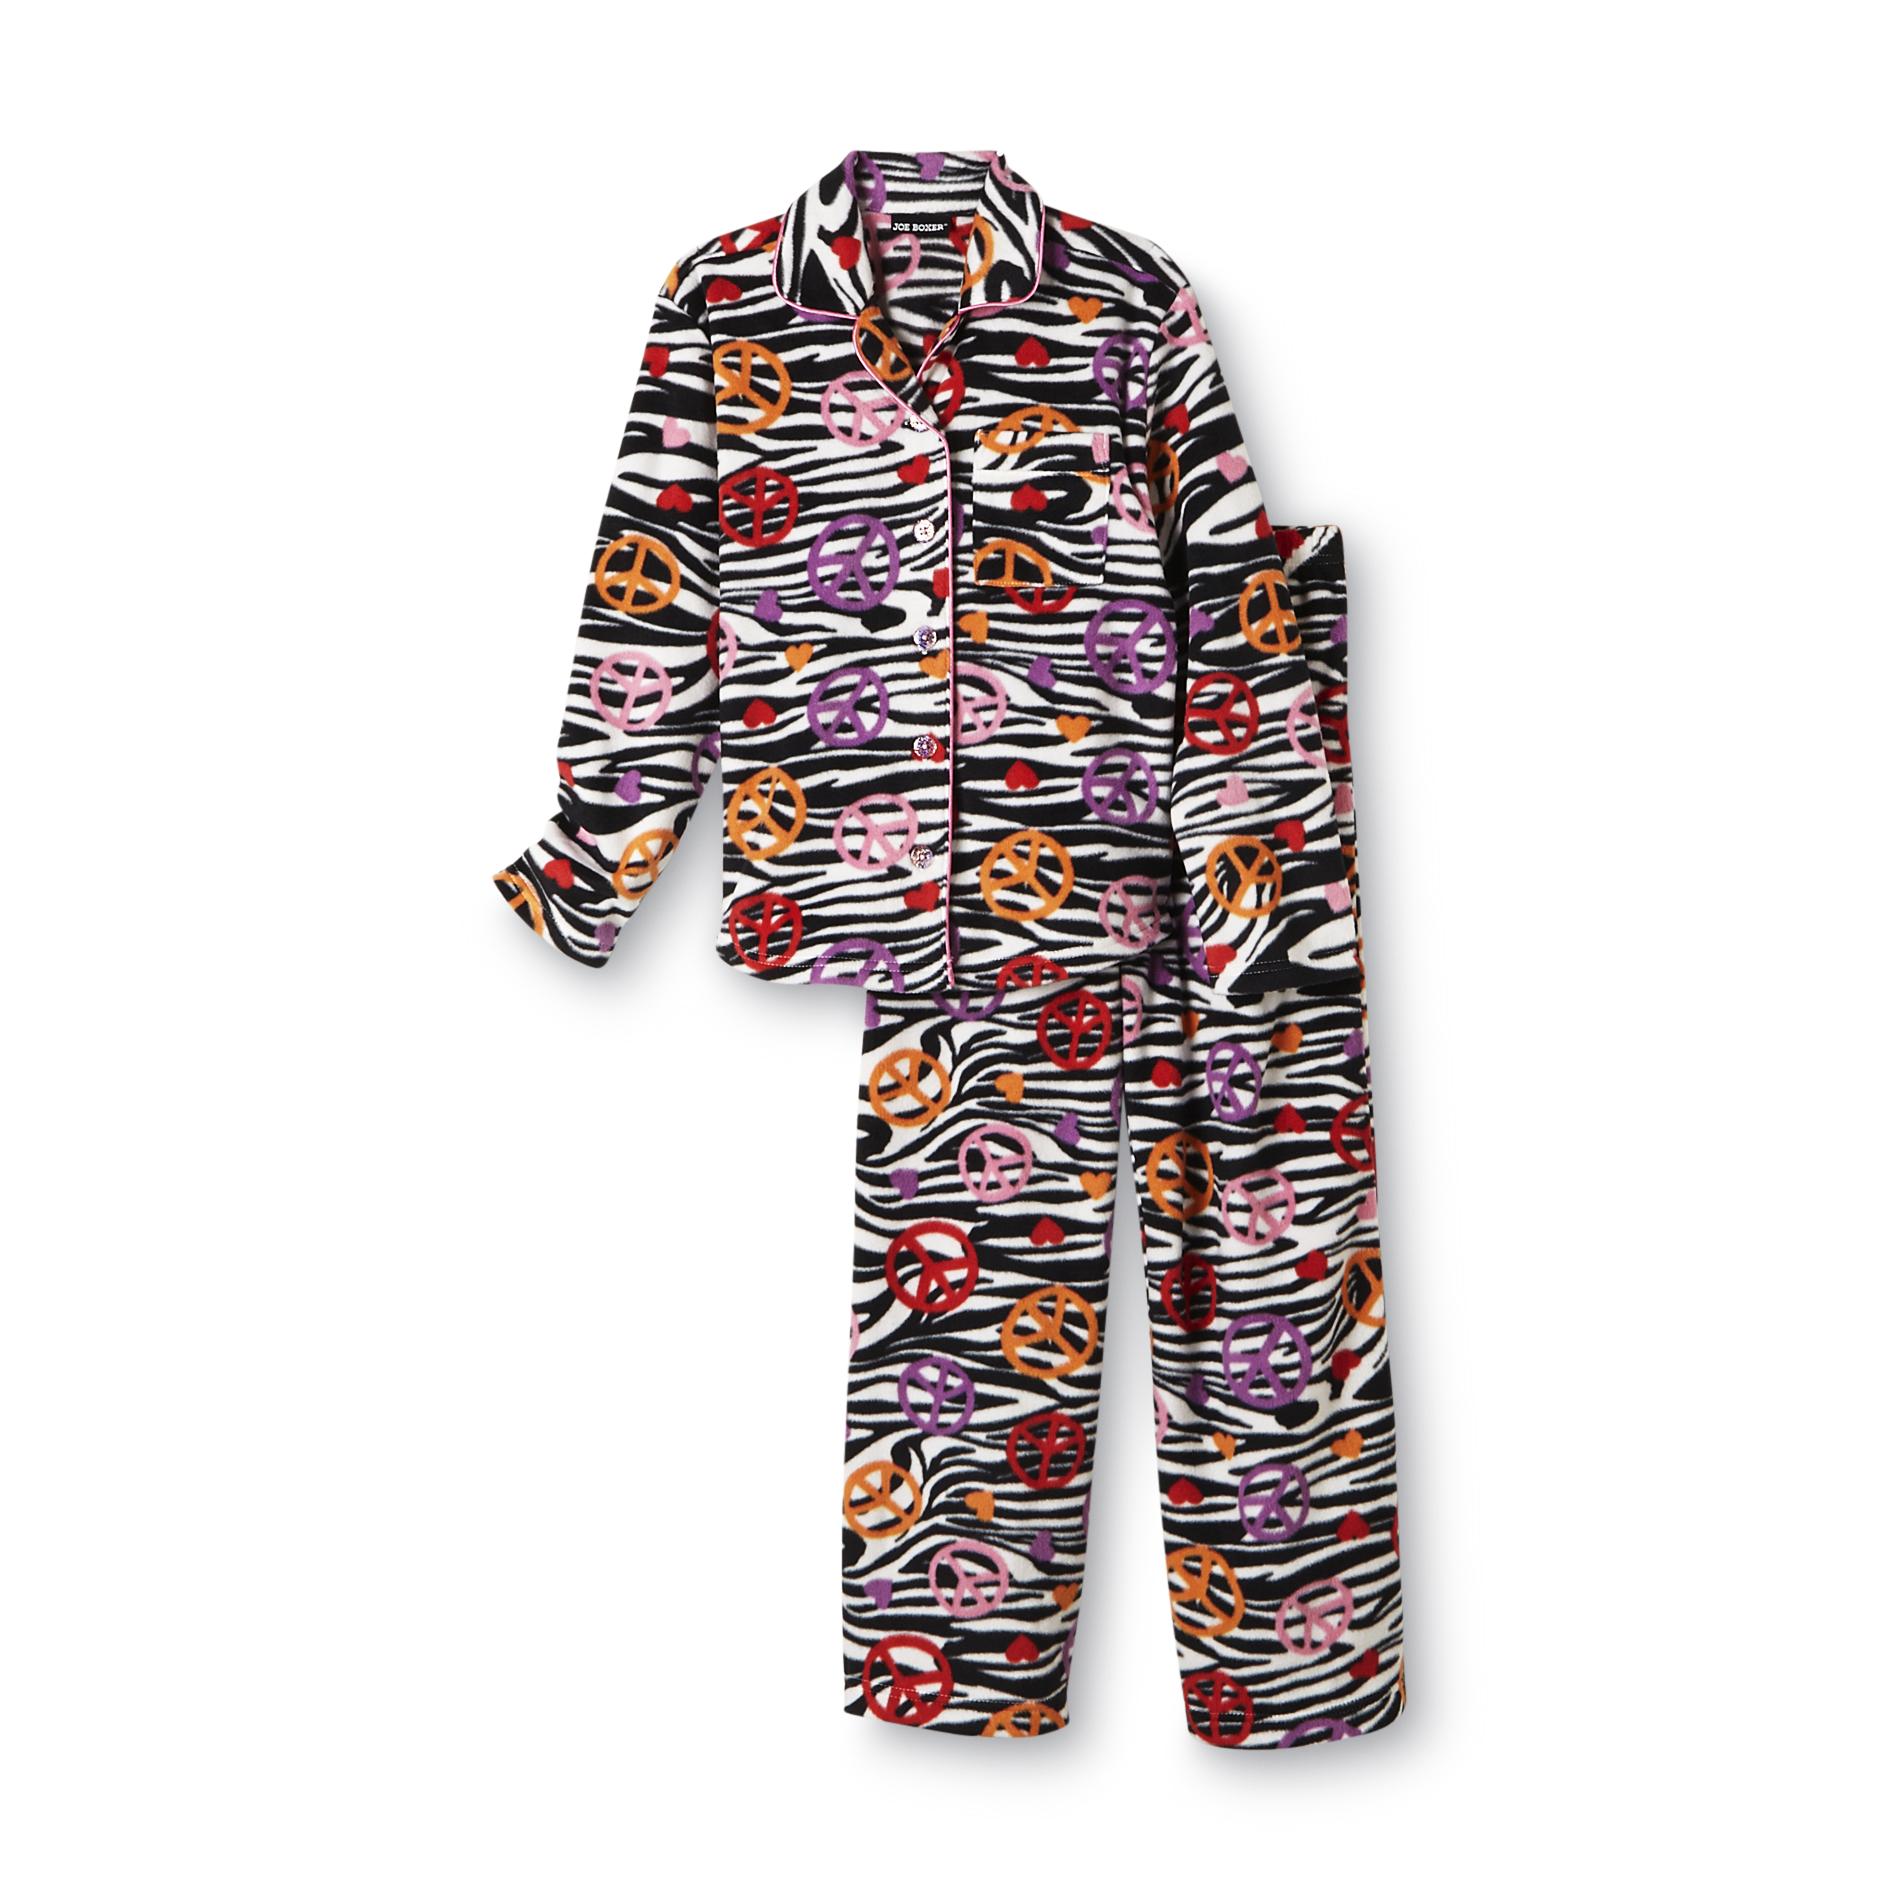 Joe Boxer Girl's Fleece Pajama Set - Animal Print & Peace